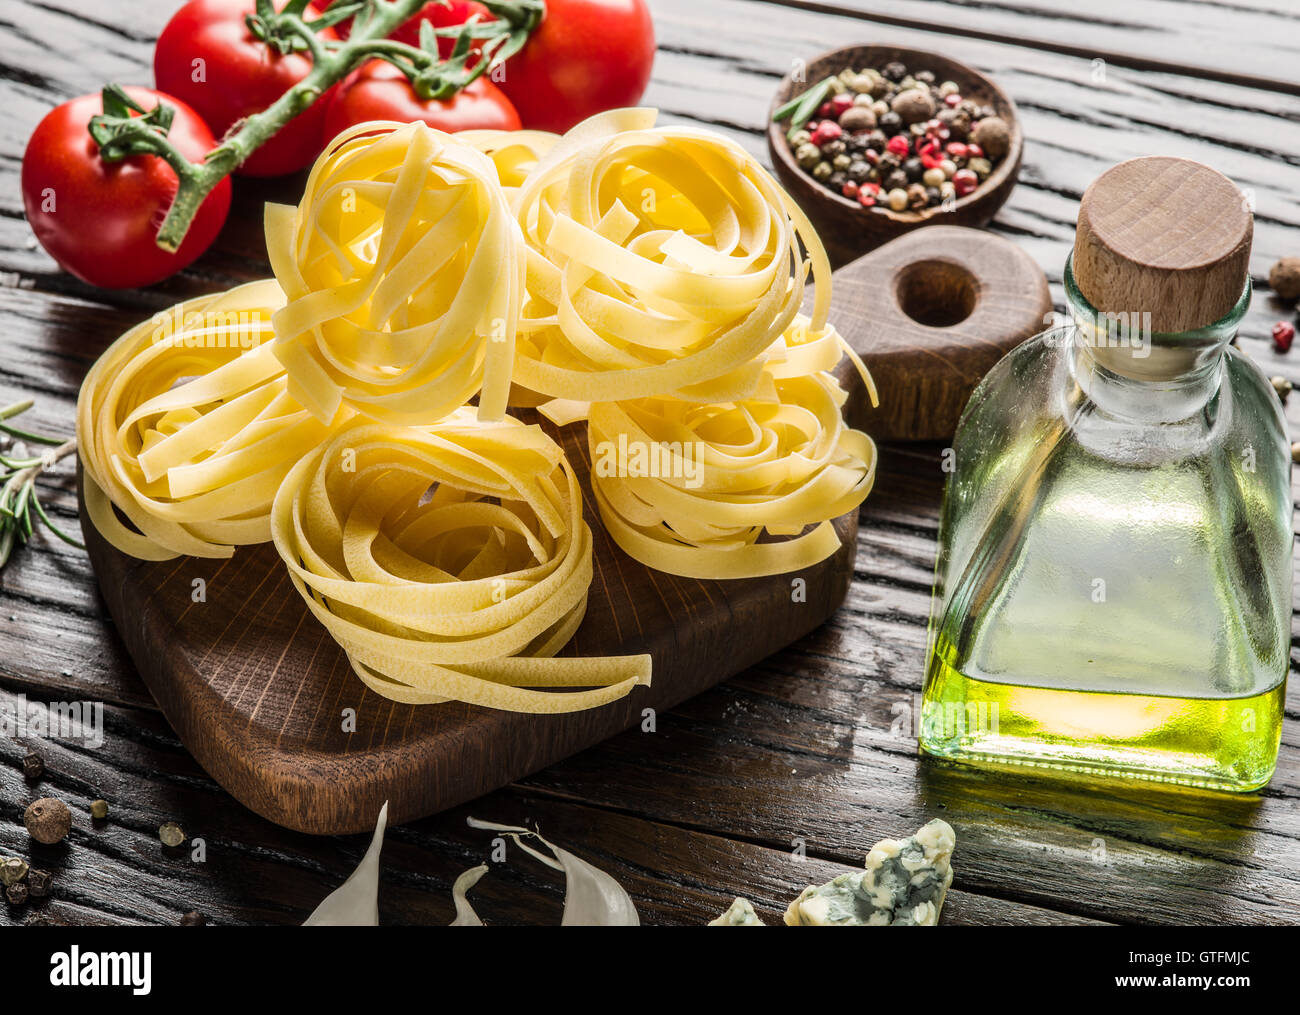 Pasta ingredientes. Tomates cereza y spaghetti pasta sobre la mesa de madera. Foto de stock